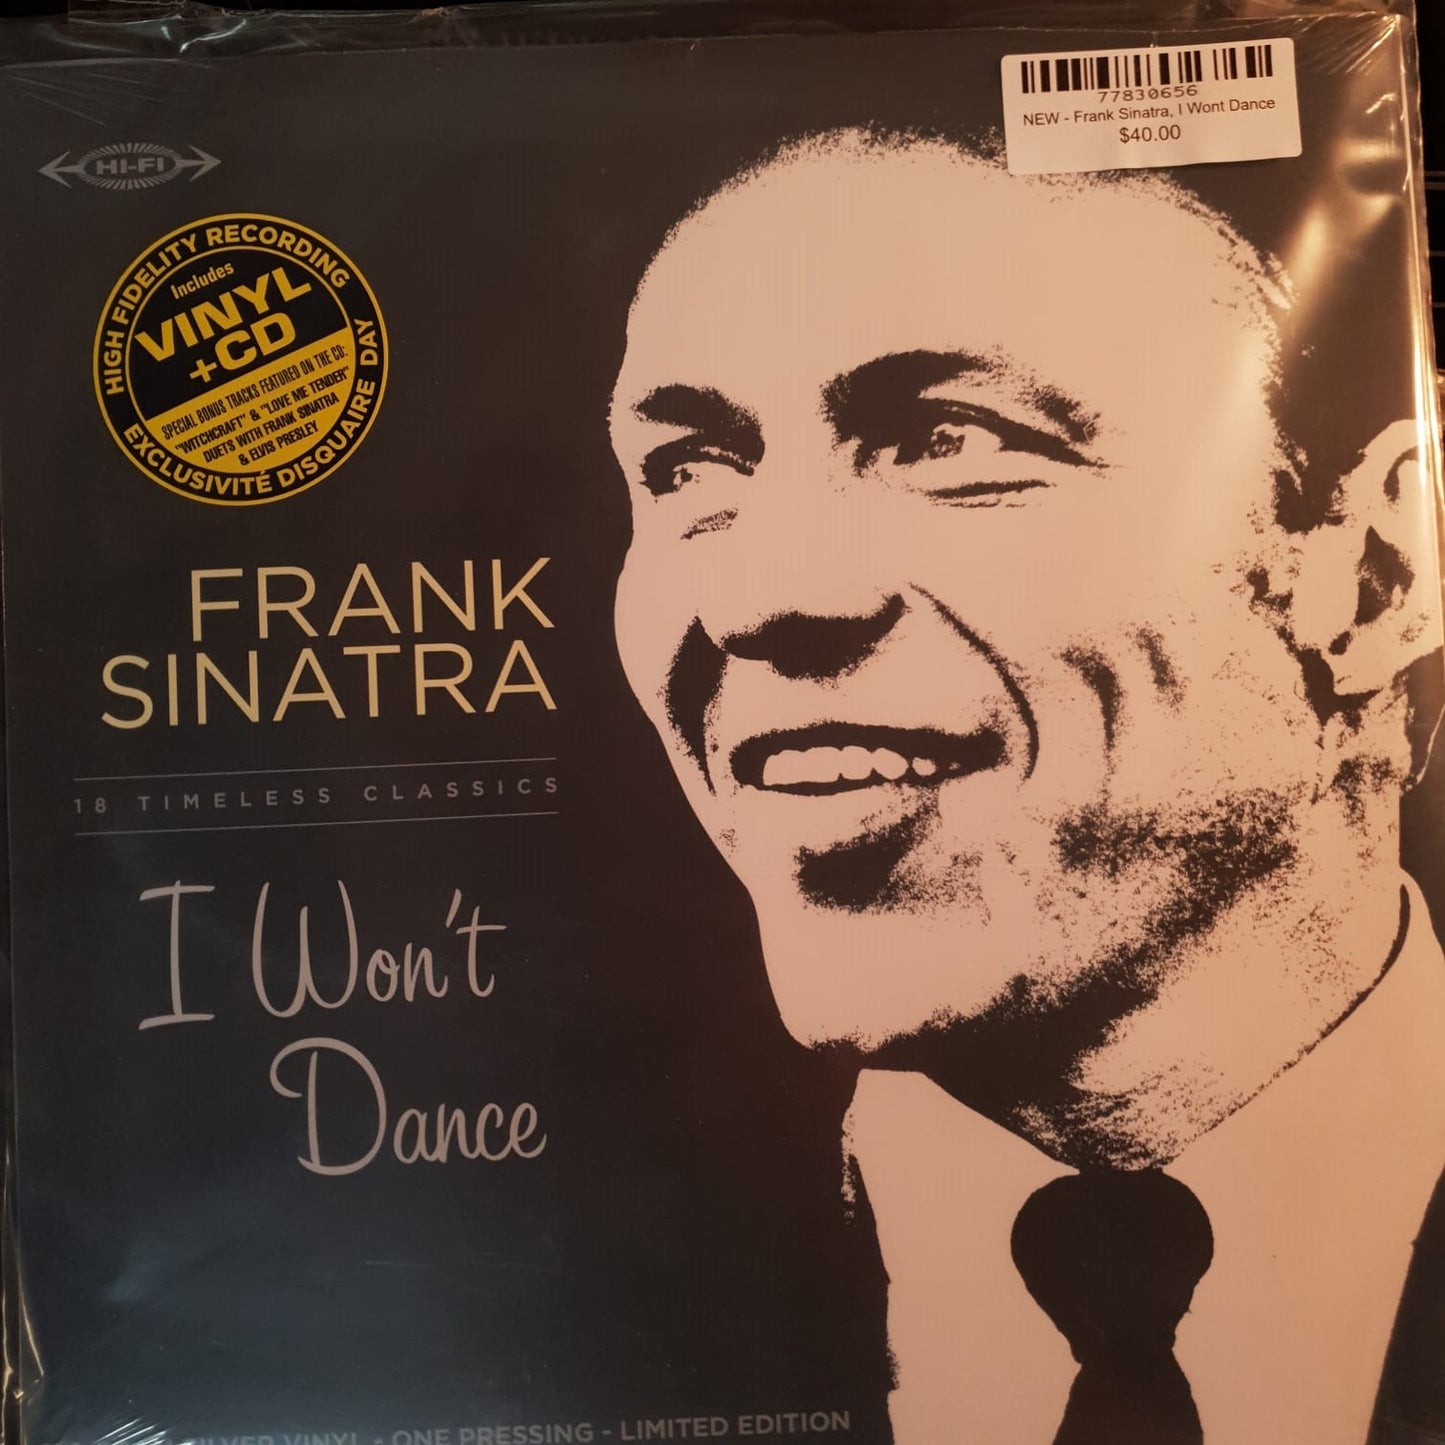 NEW - Frank Sinatra, I Wont Dance Vinyl